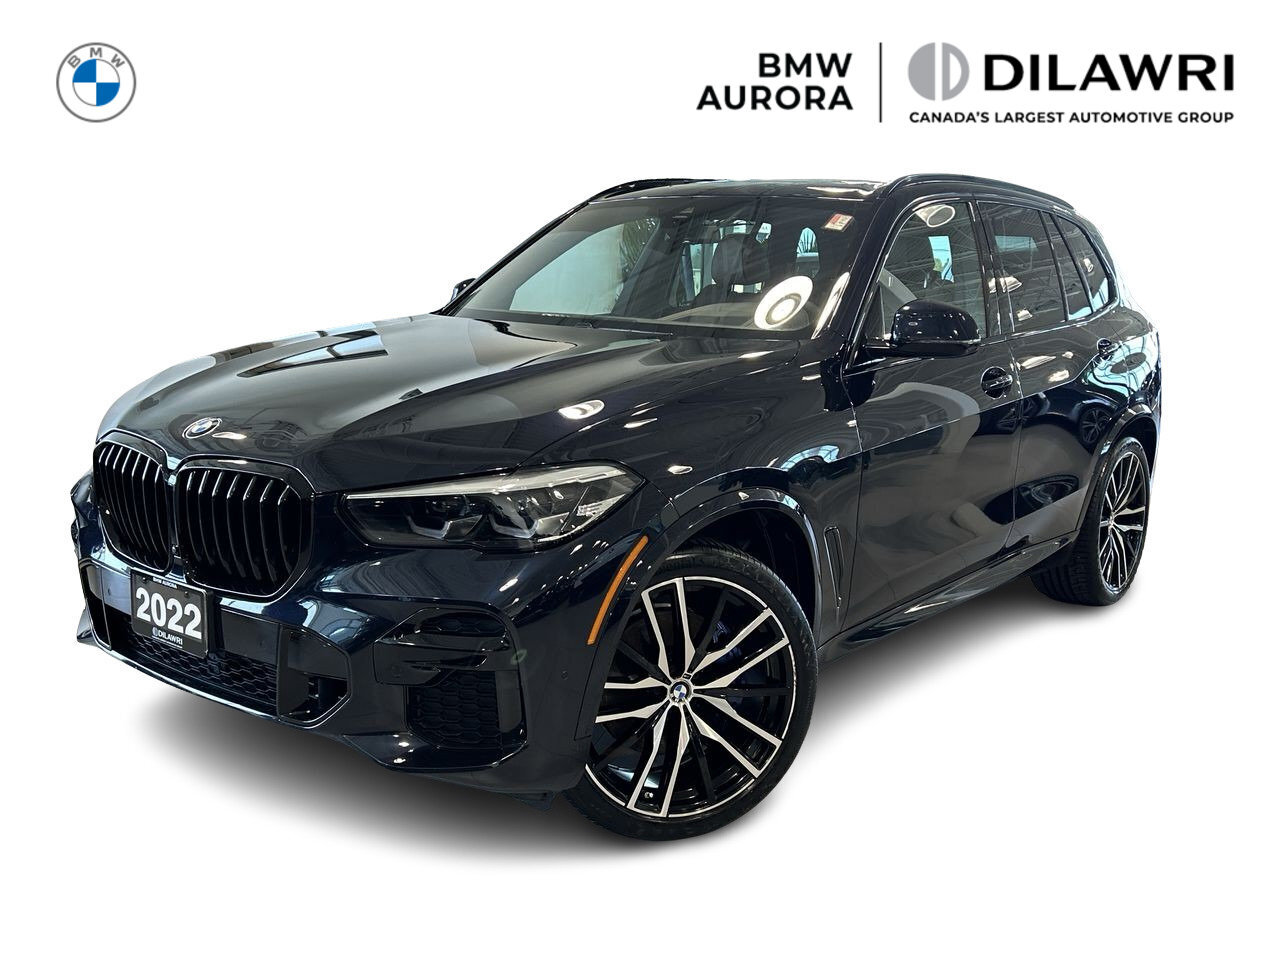 2022 BMW X5 XDrive40i Black Exterior Content | Universal Garag